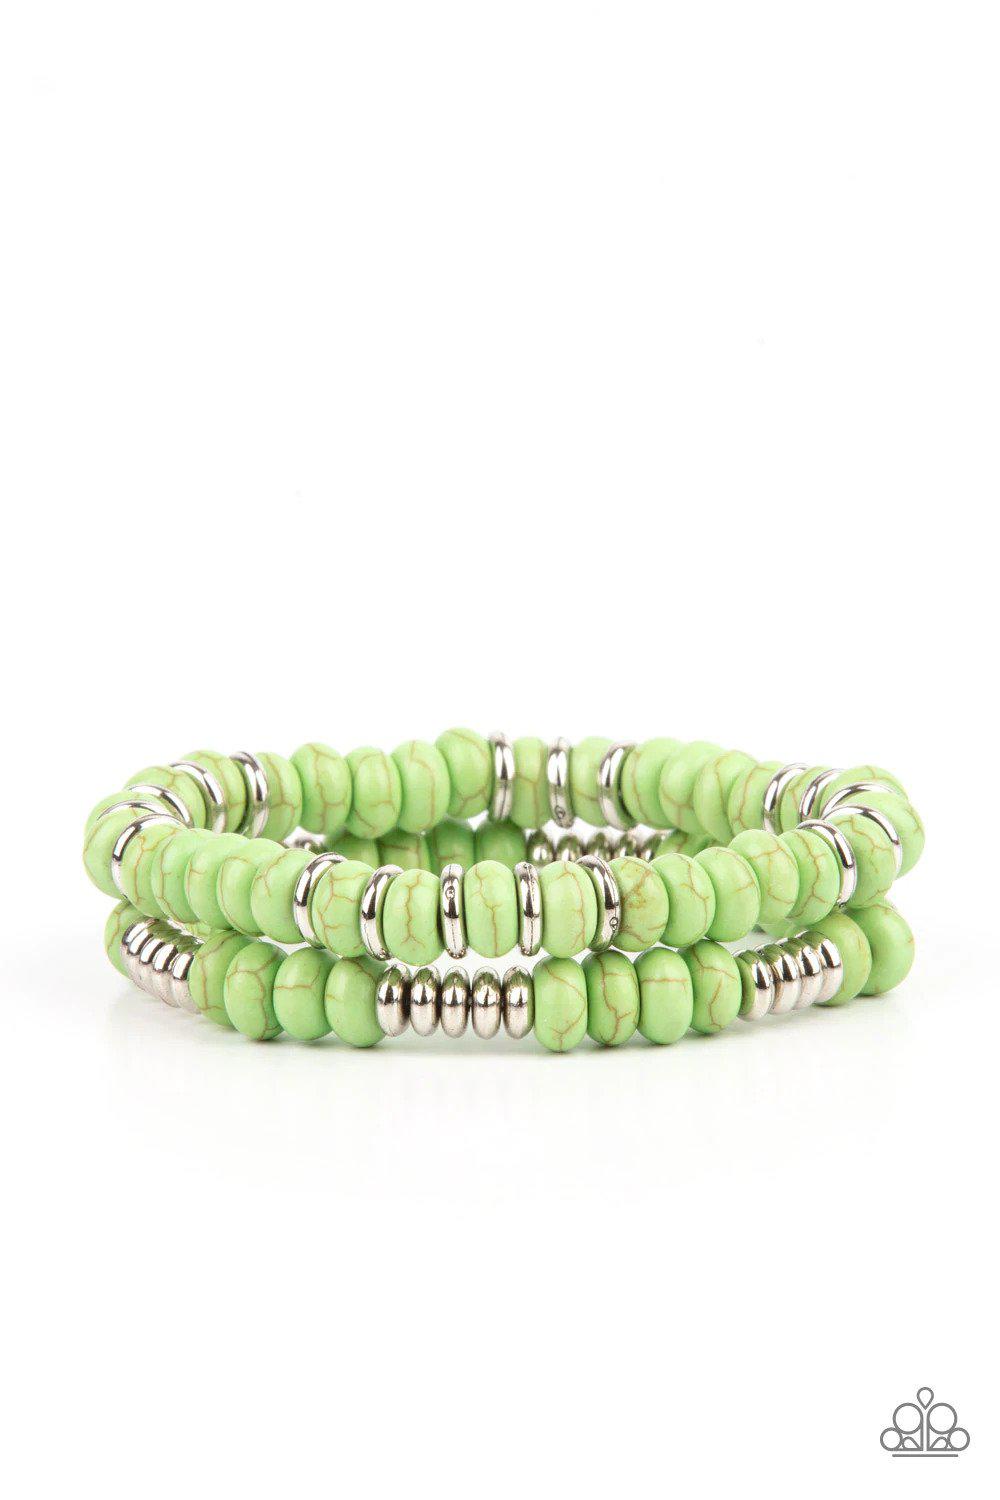 Desert Rainbow Green Bracelet - Paparazzi Accessories- lightbox - CarasShop.com - $5 Jewelry by Cara Jewels